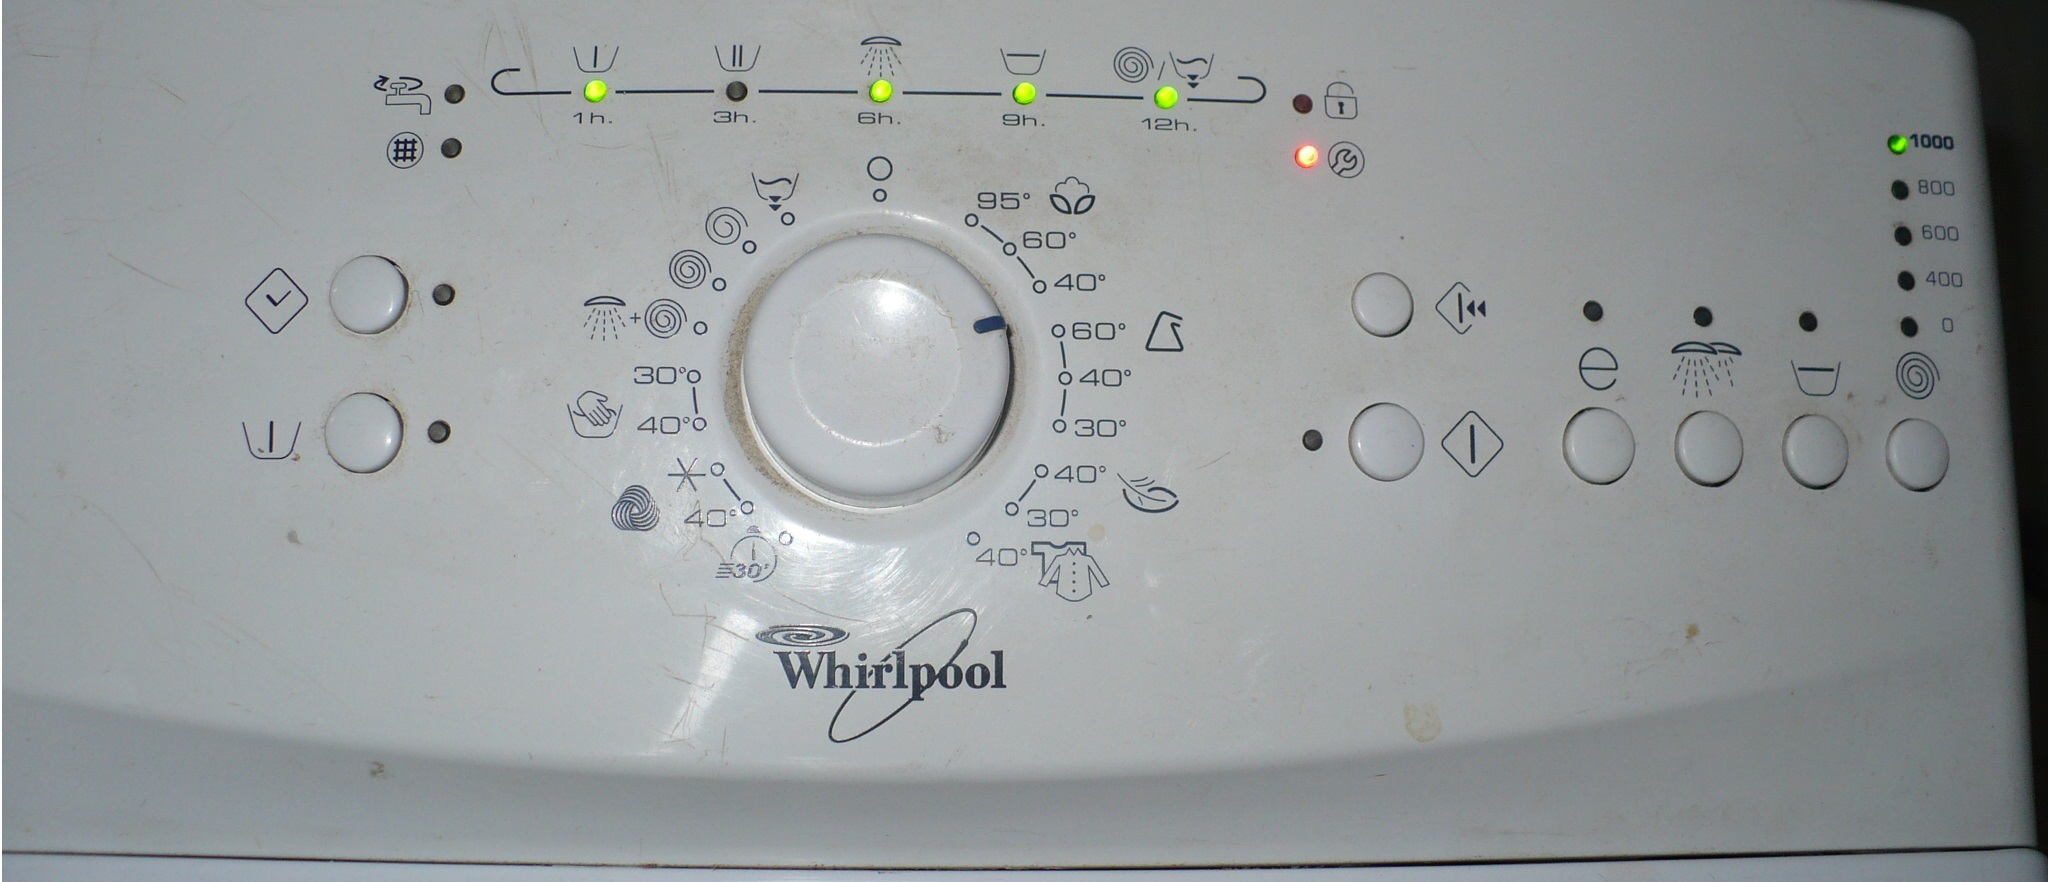 Programes auxiliars Whirlpool